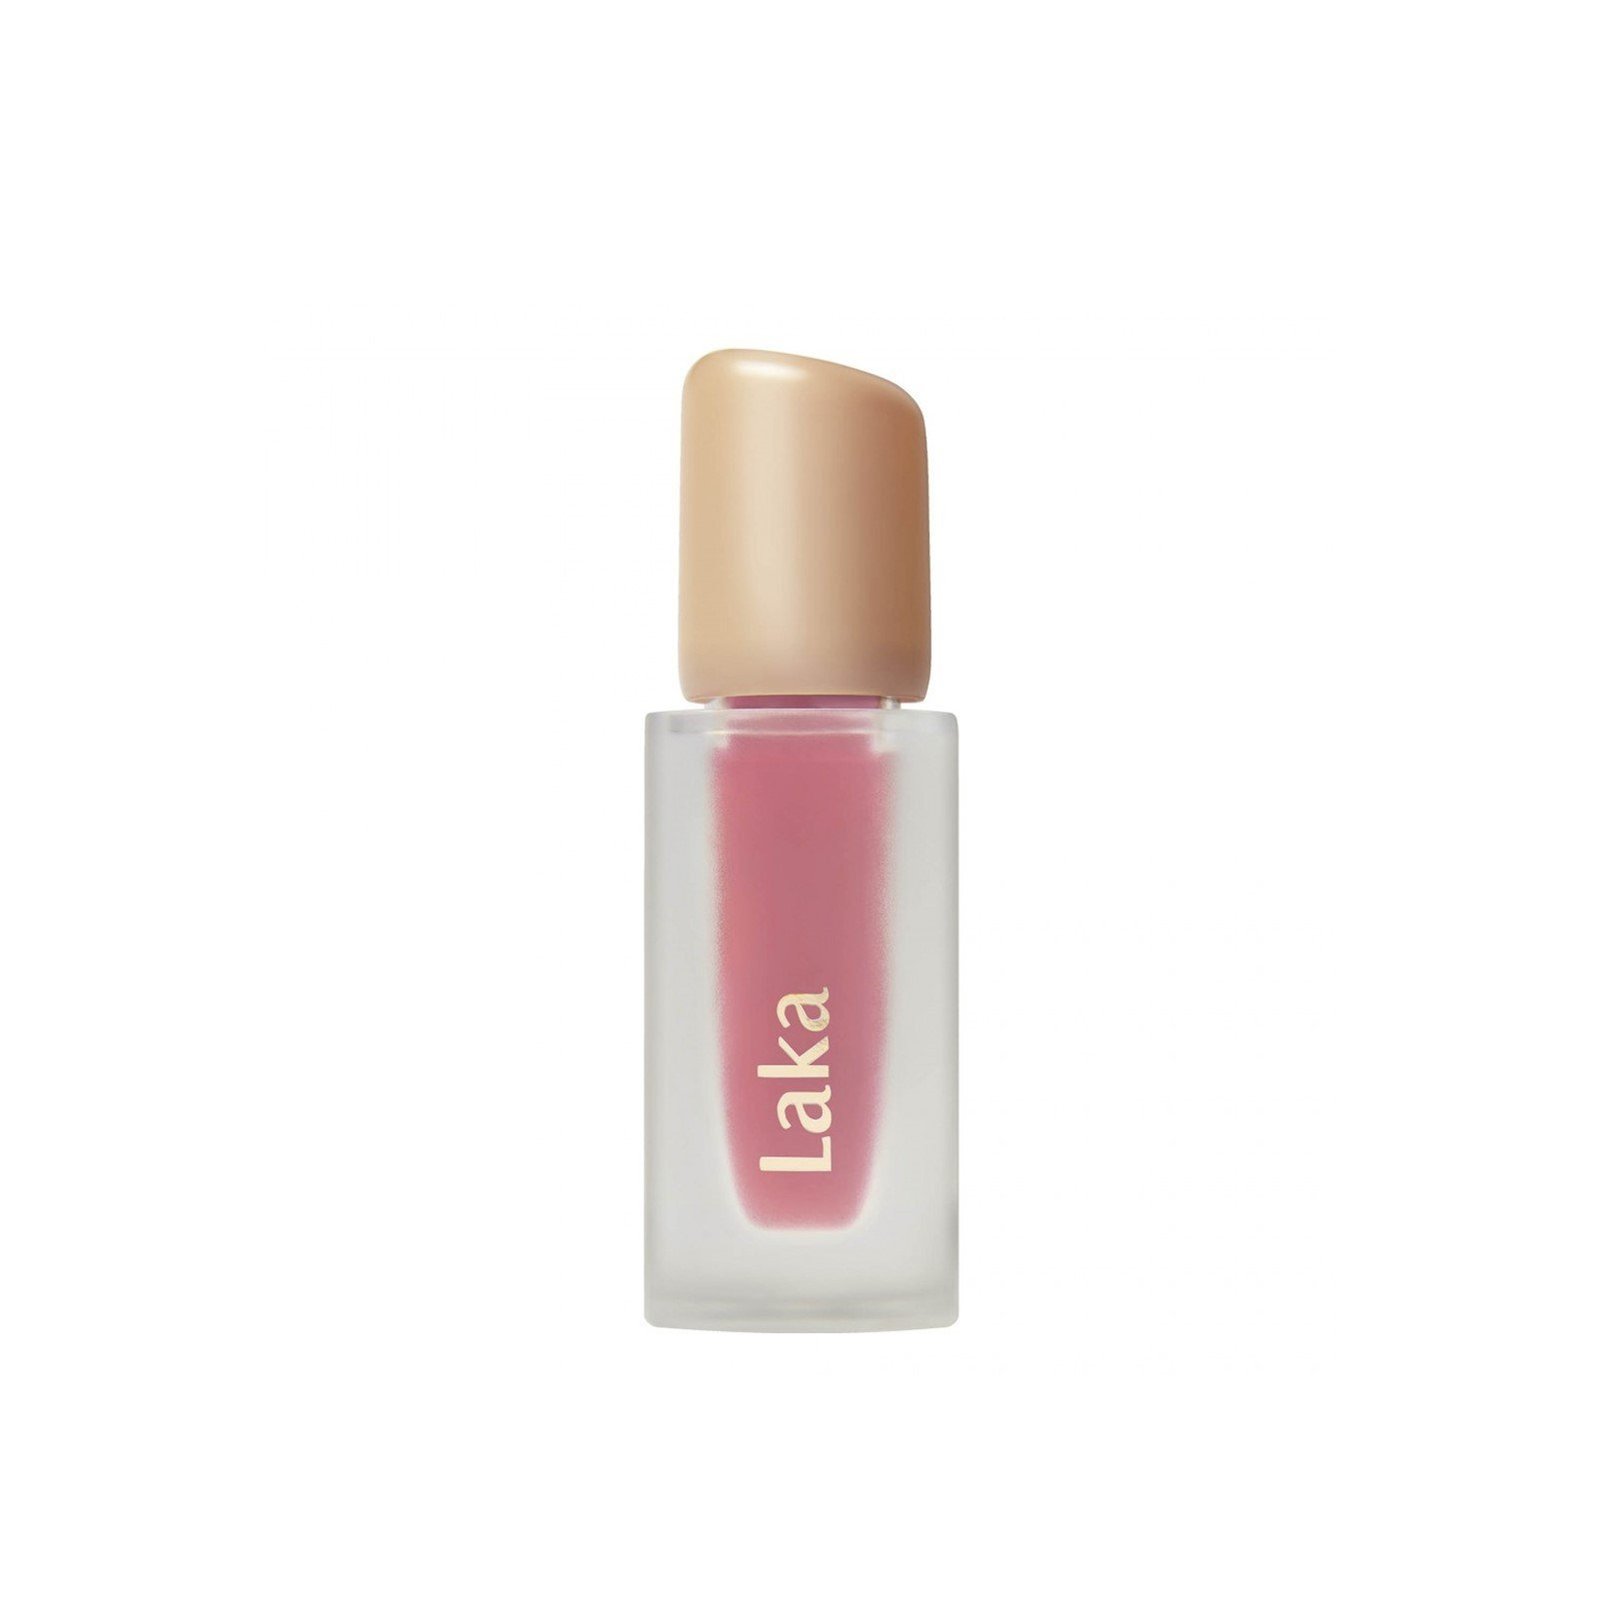 Laka Fruity Glam Lip Tint 118 Adore 4.5g (0.15 oz)